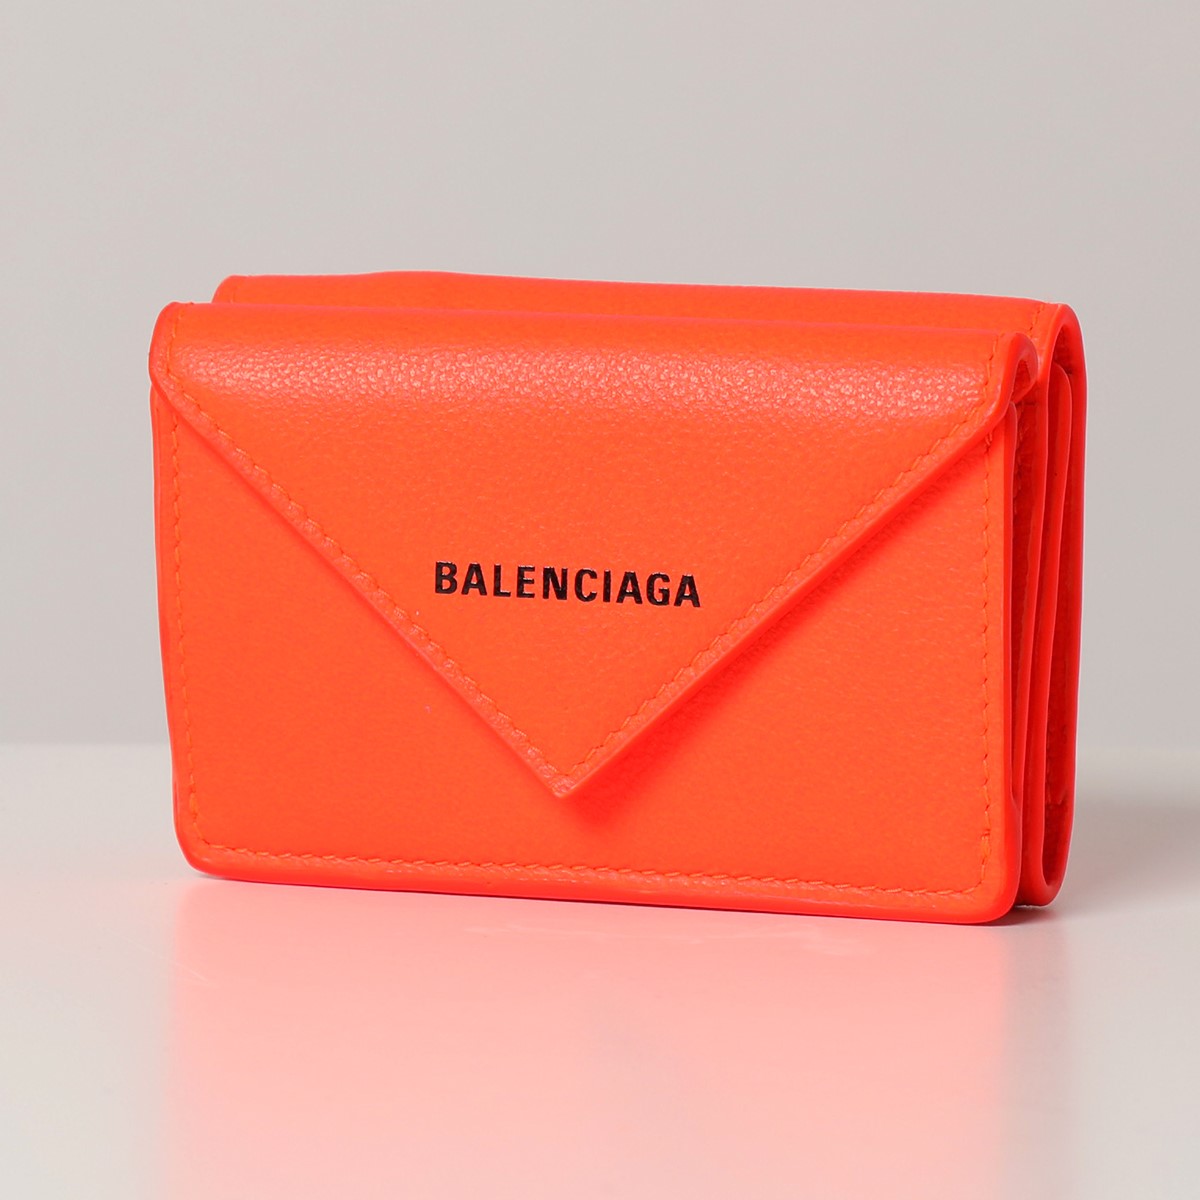 Balenciaga バレンシアガ 18d5n Papier Mini Wallet なめし革 三つ曲がり目がま口 ミニ財布 ビーン財布 7560 Fluo Orange Black レディース Sogestmont Ca